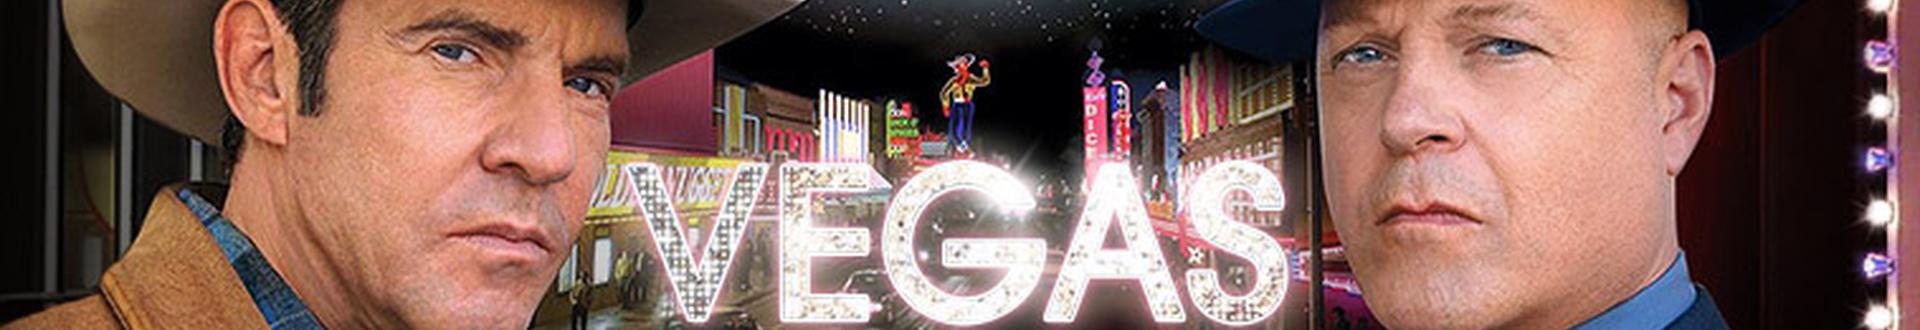 Image illustrative de Vegas